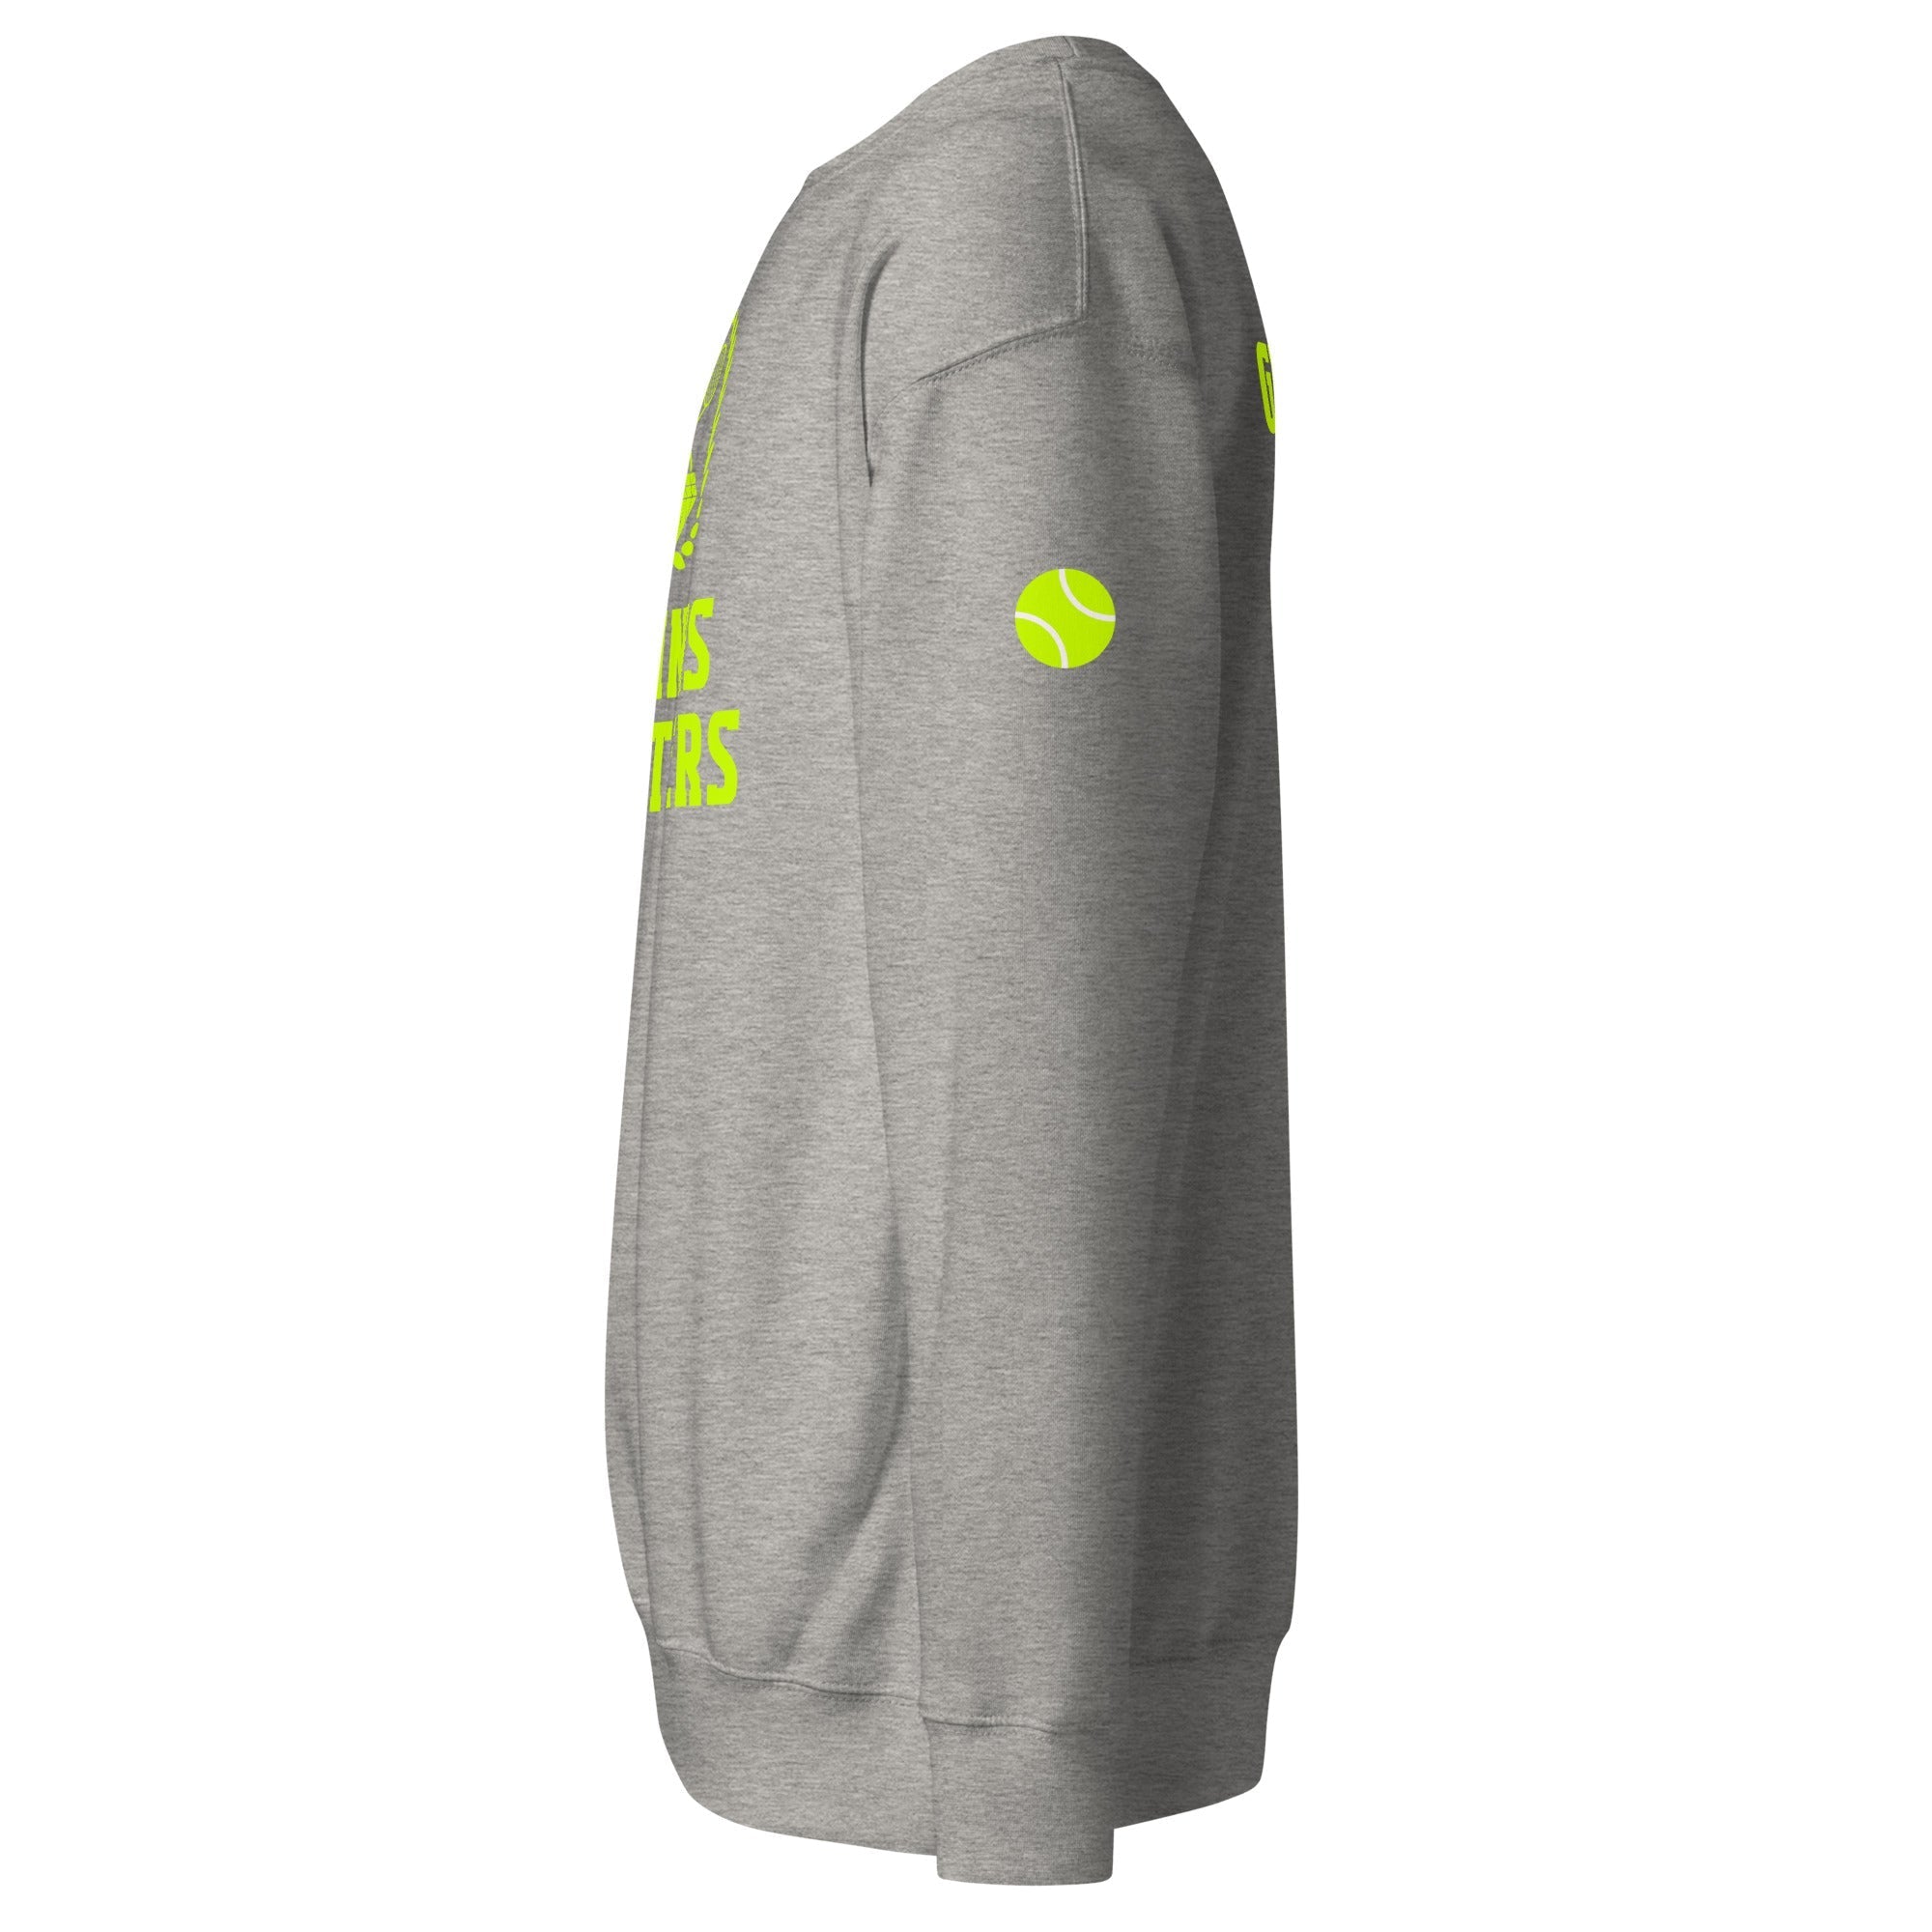 Unisex Premium Sweatshirt - Tennis Masters Geneva - GRAPHIC T-SHIRTS